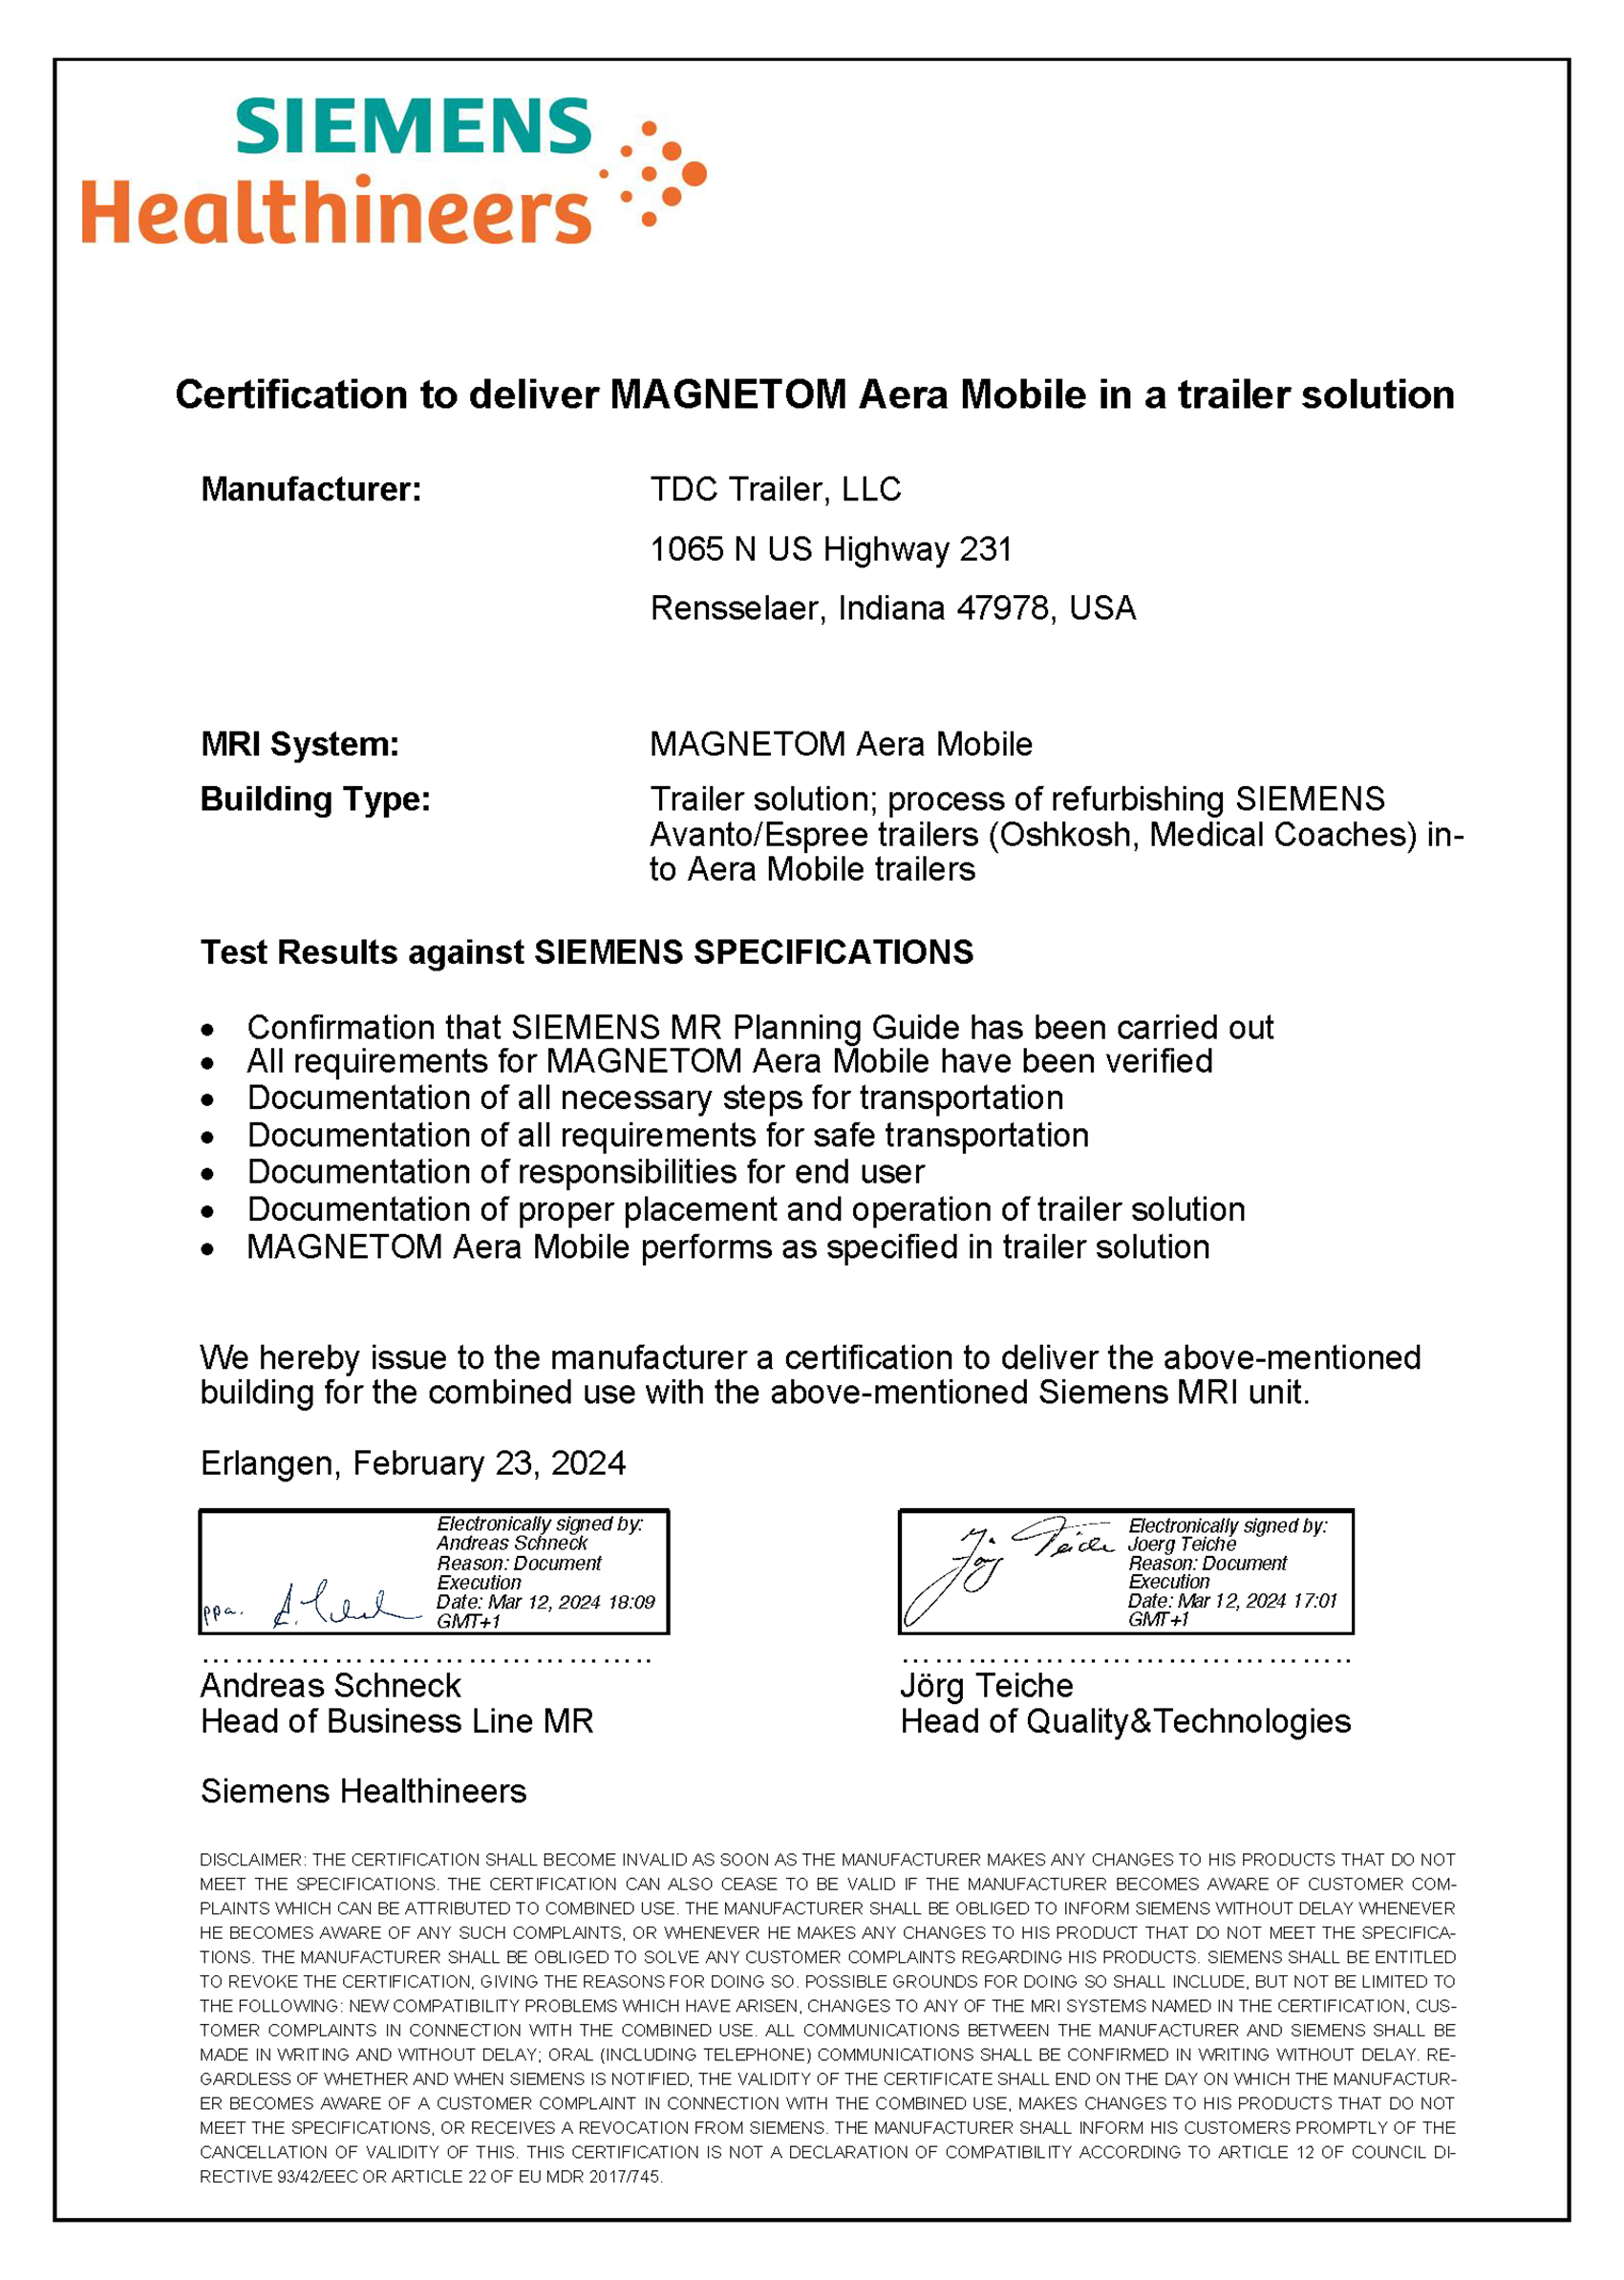 Siemens Certificate of MAGNETOM Aera Mobile System